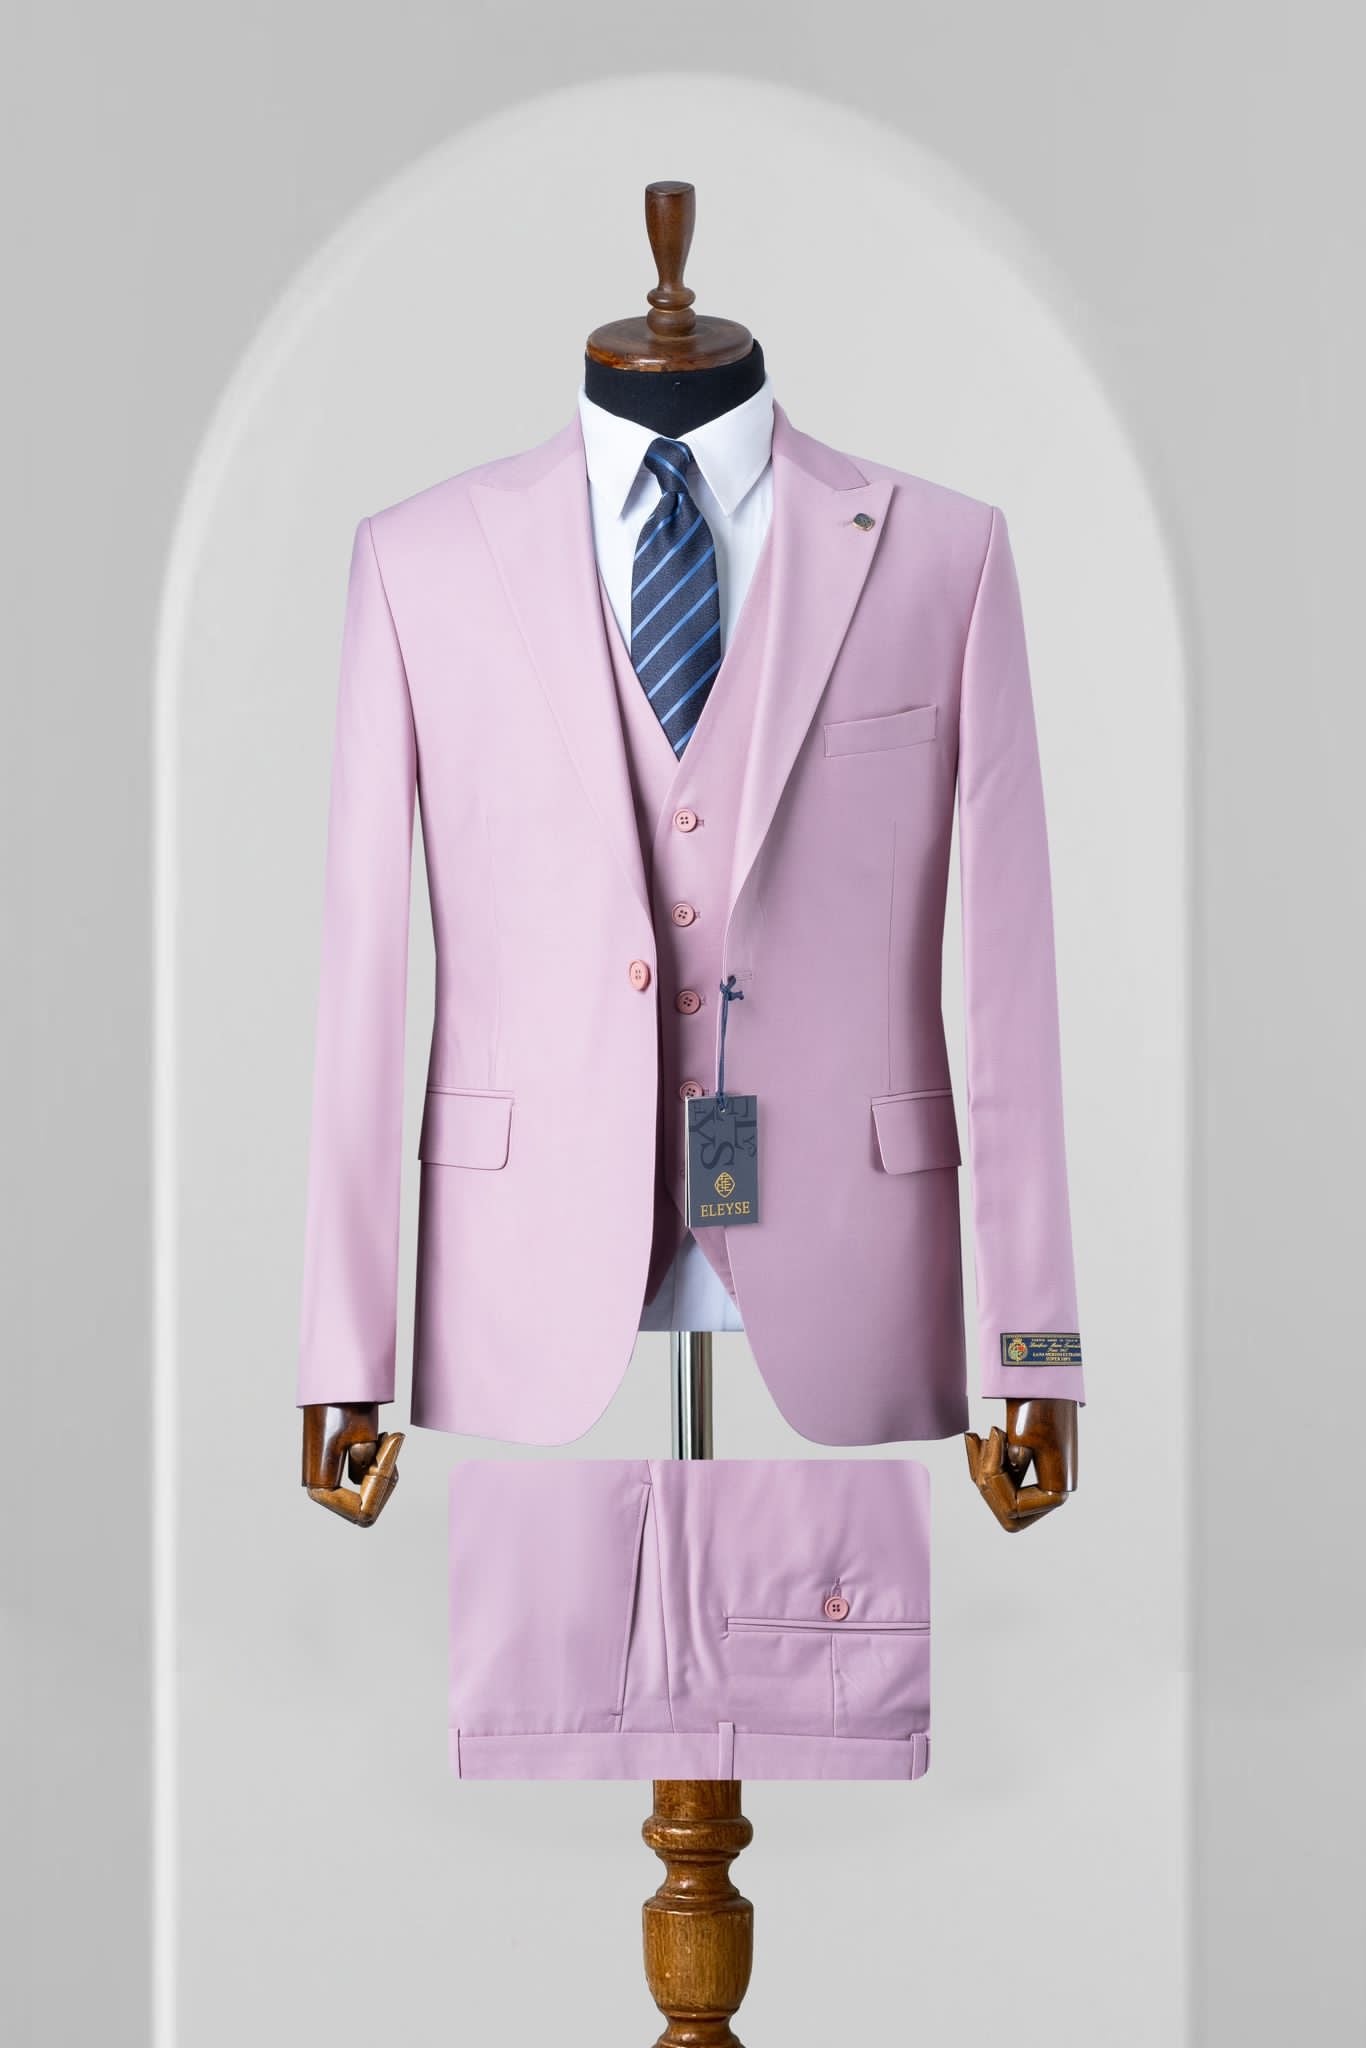 Turkish 3-Piece Suit Wholesale: Authentic 3-Piece Elegance for Discerning Retailers - 6 Suit Pack (Model: AA_Tur_4_256)